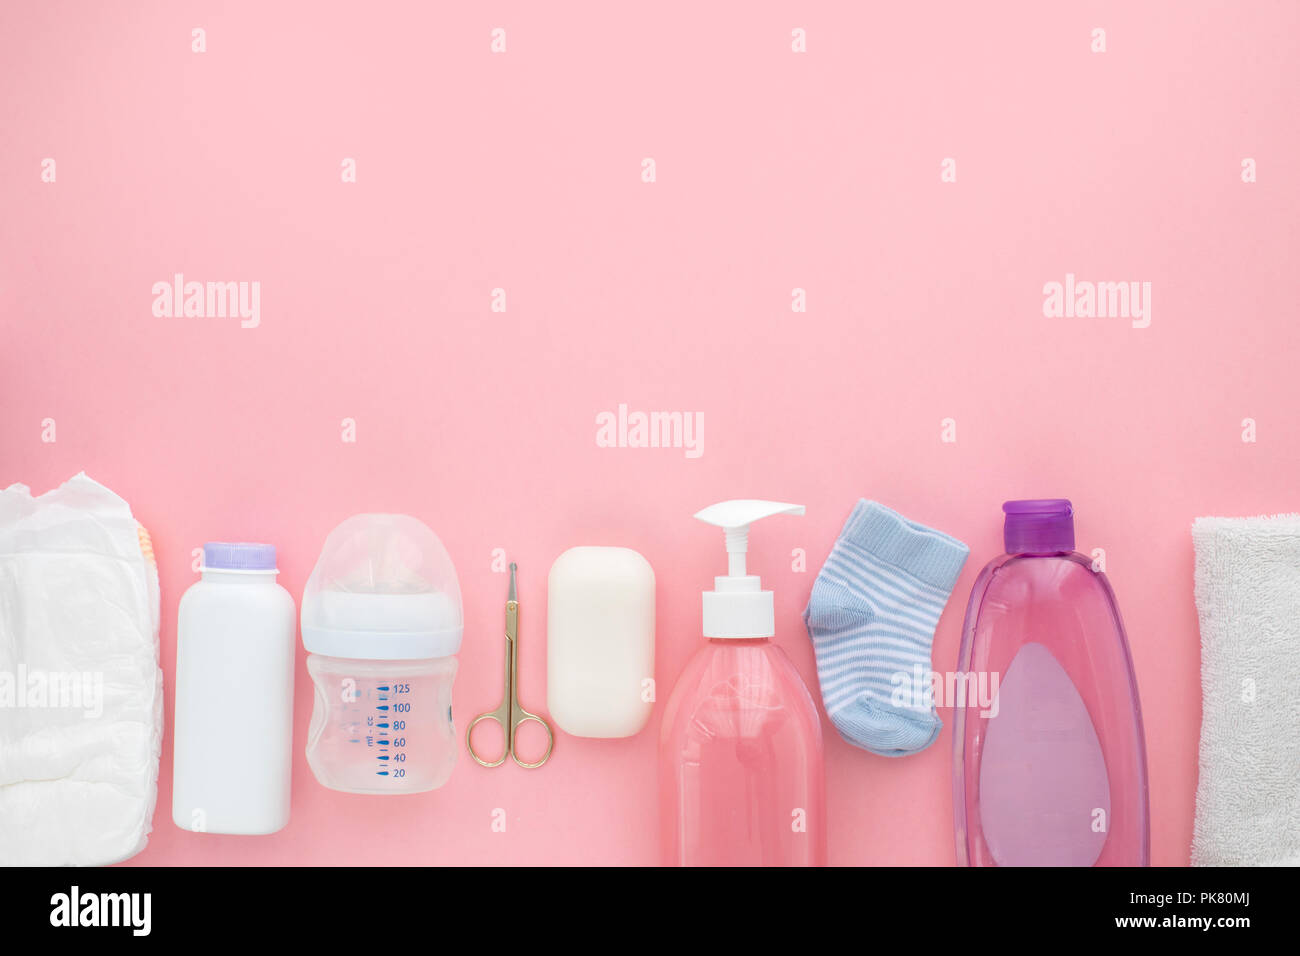 Children's hygiene unisex newborn baby necessities Stock Photo